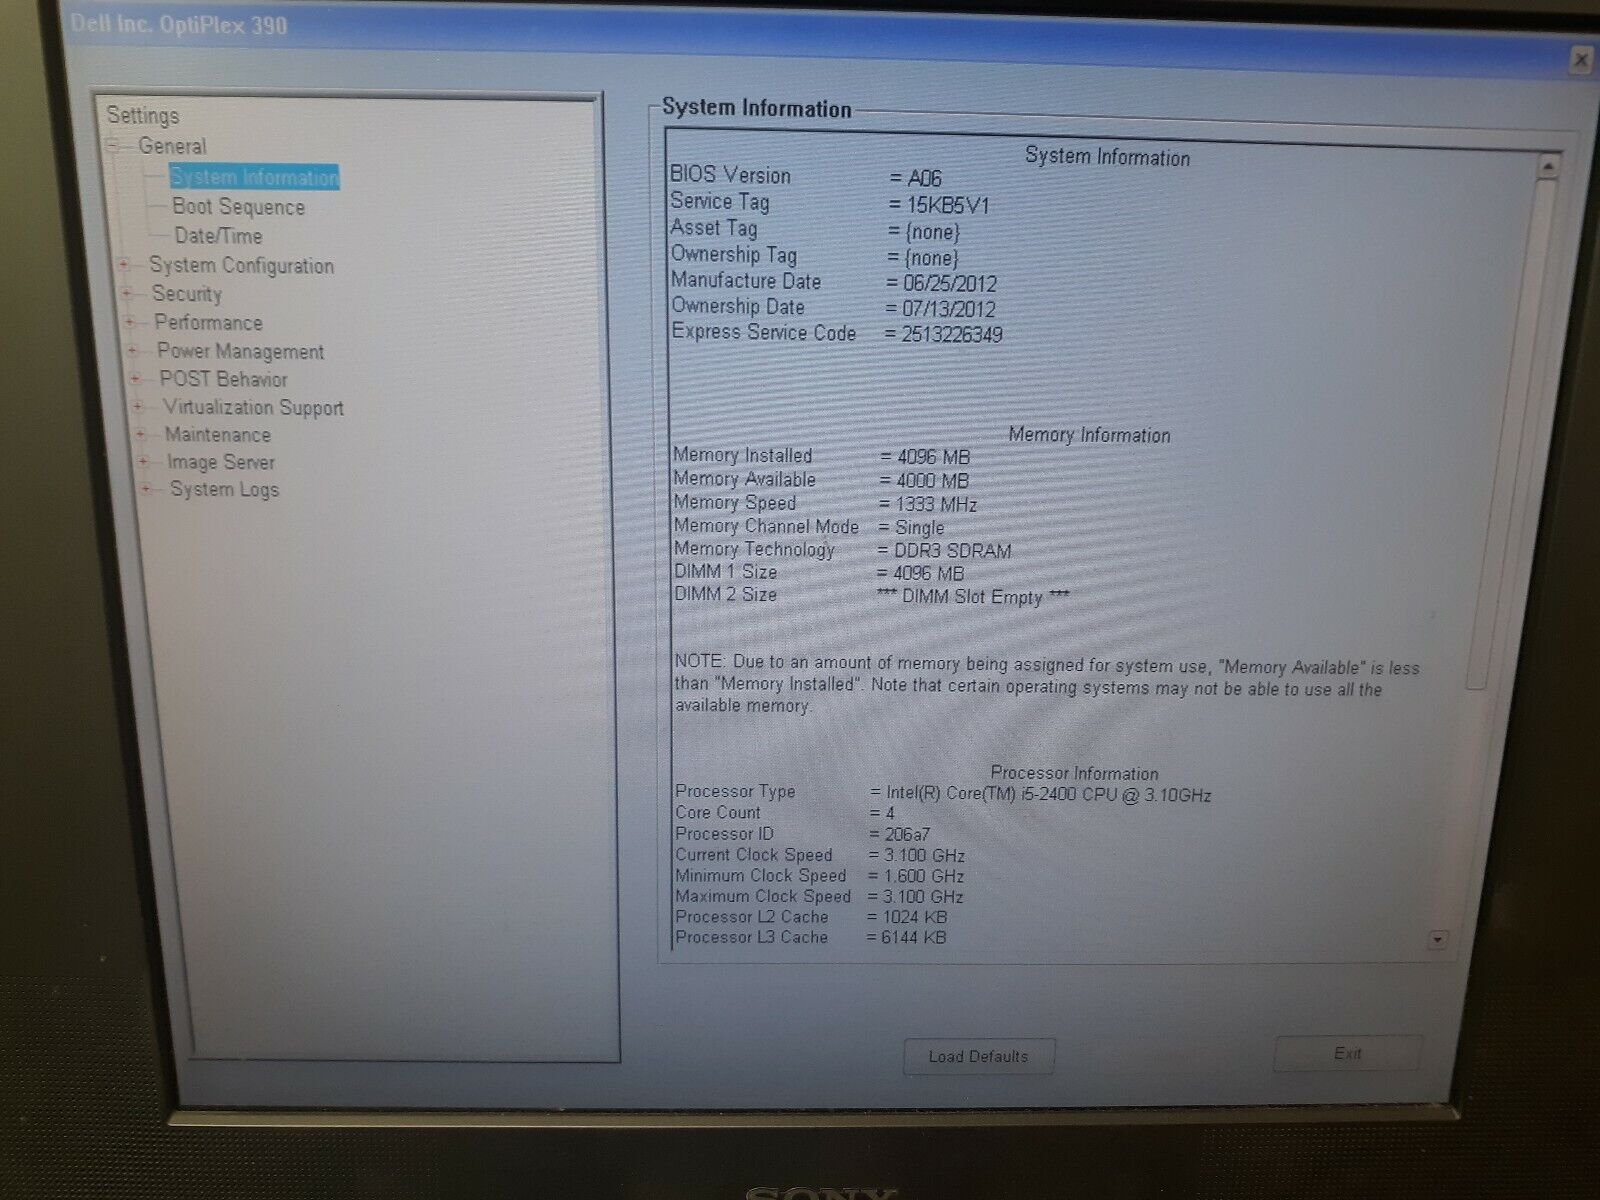 Motherboard From Dell Optiplex 390 Intel Core i5-2400 @ 3.10 GHz + 4 GB RAM